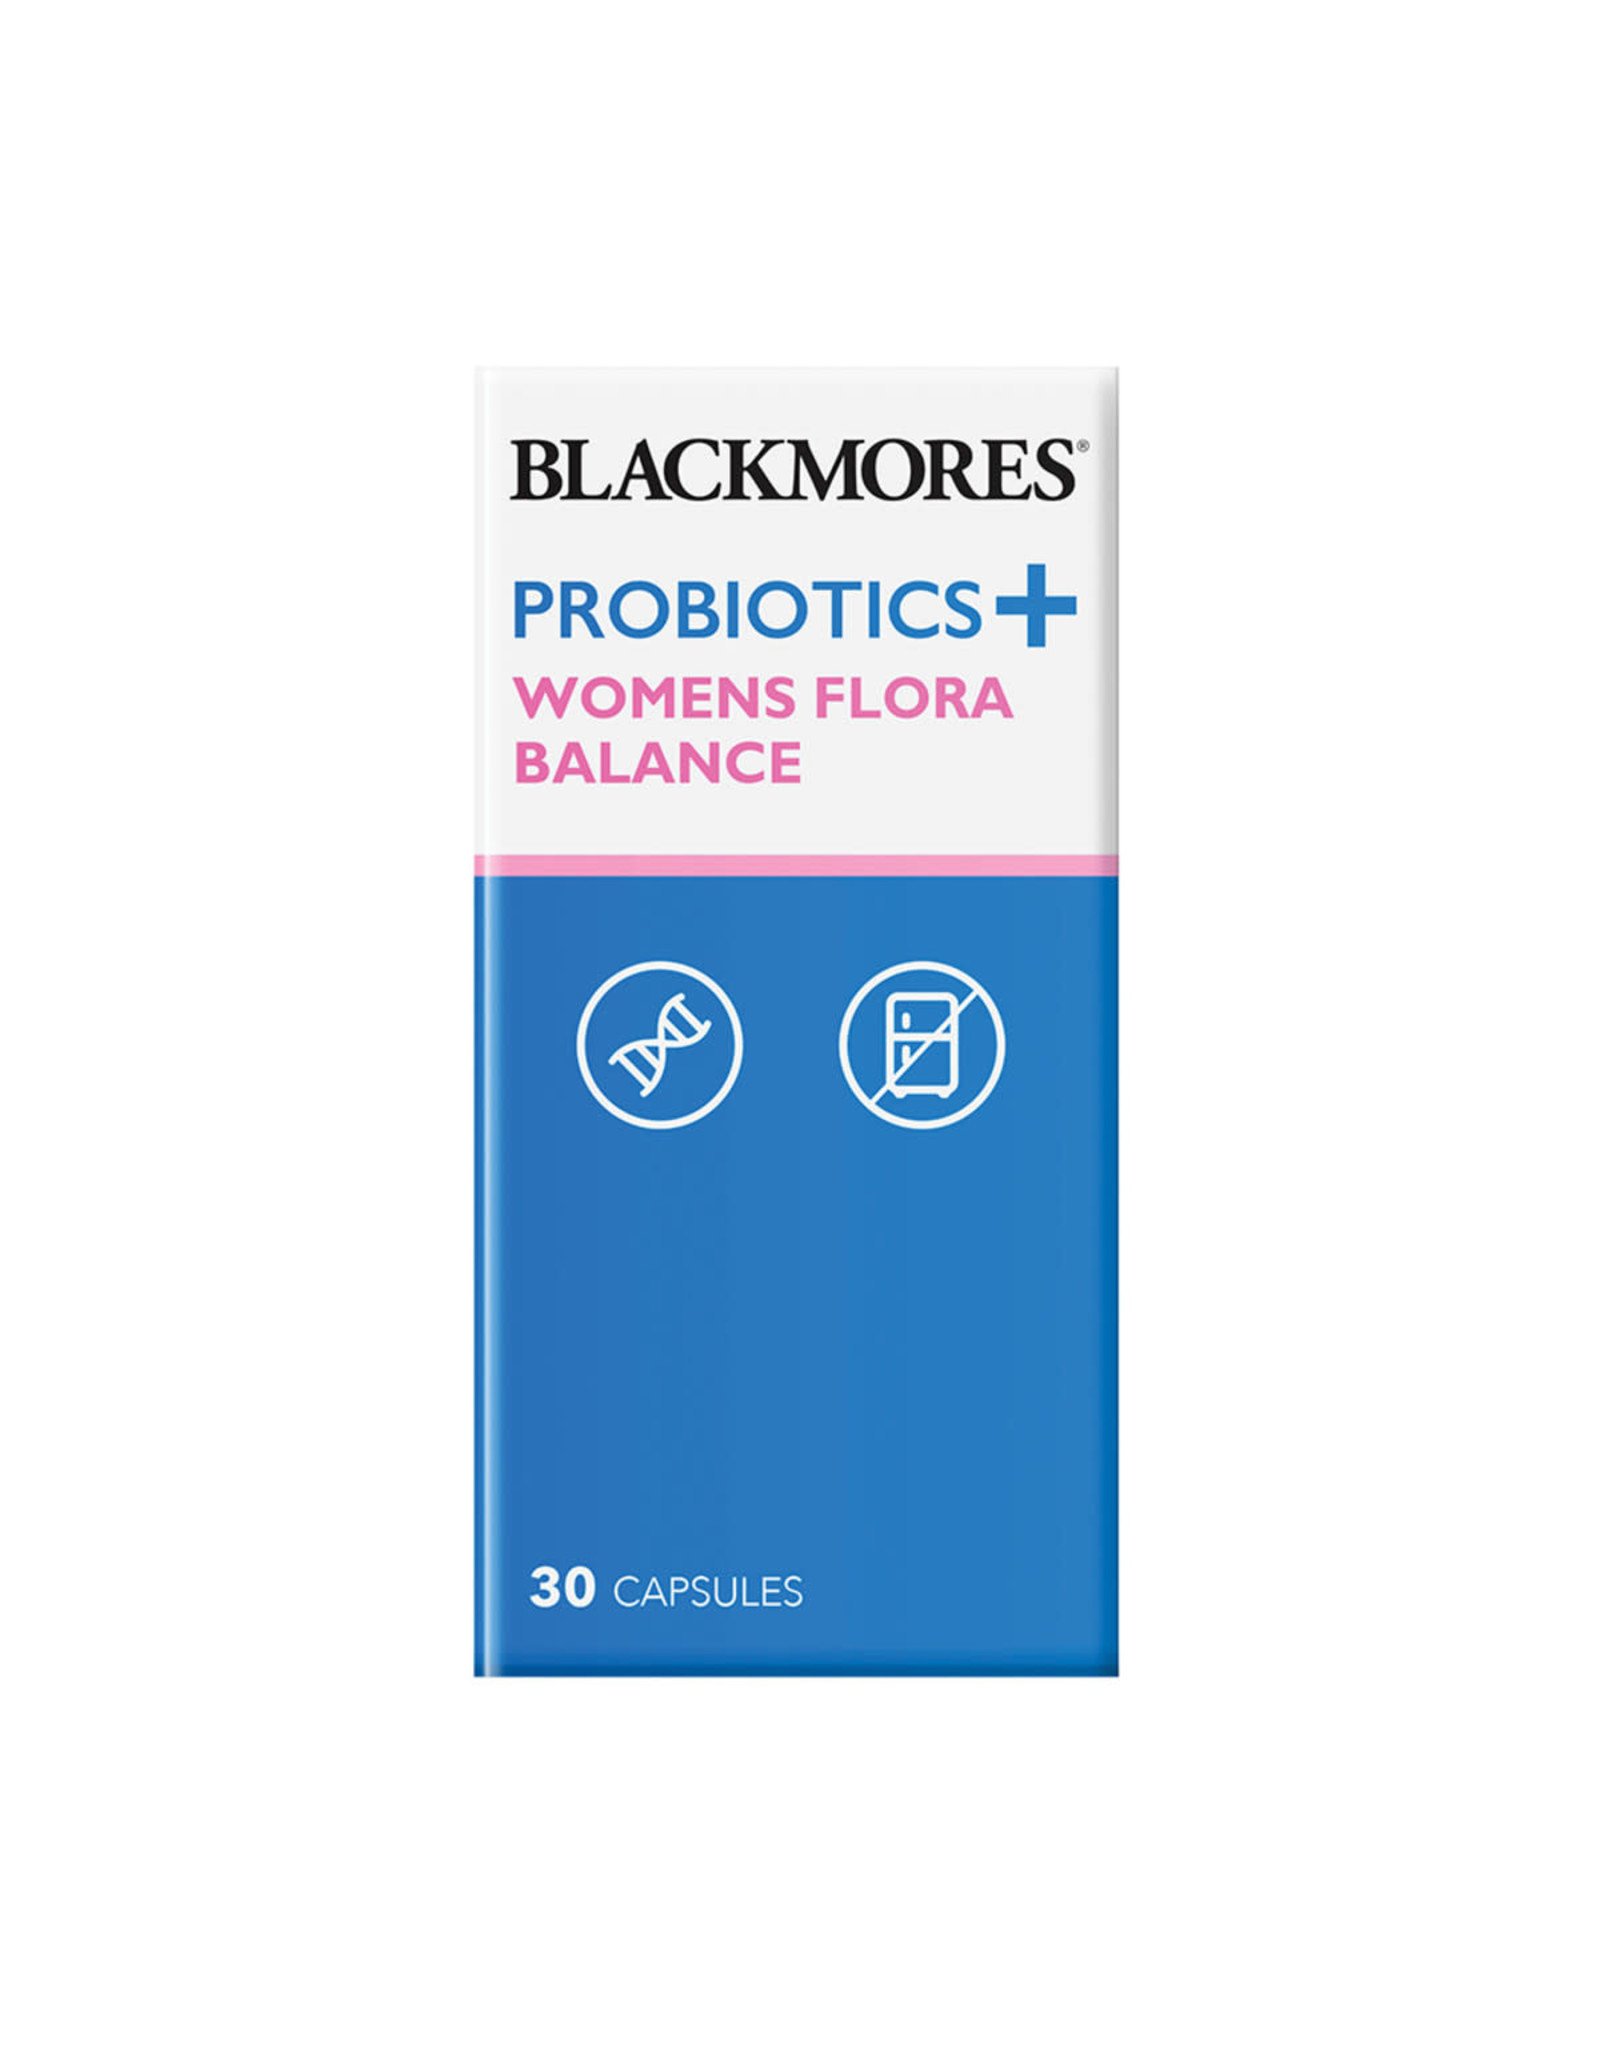 Blackmores Probiotics+ Women's Flora Balance